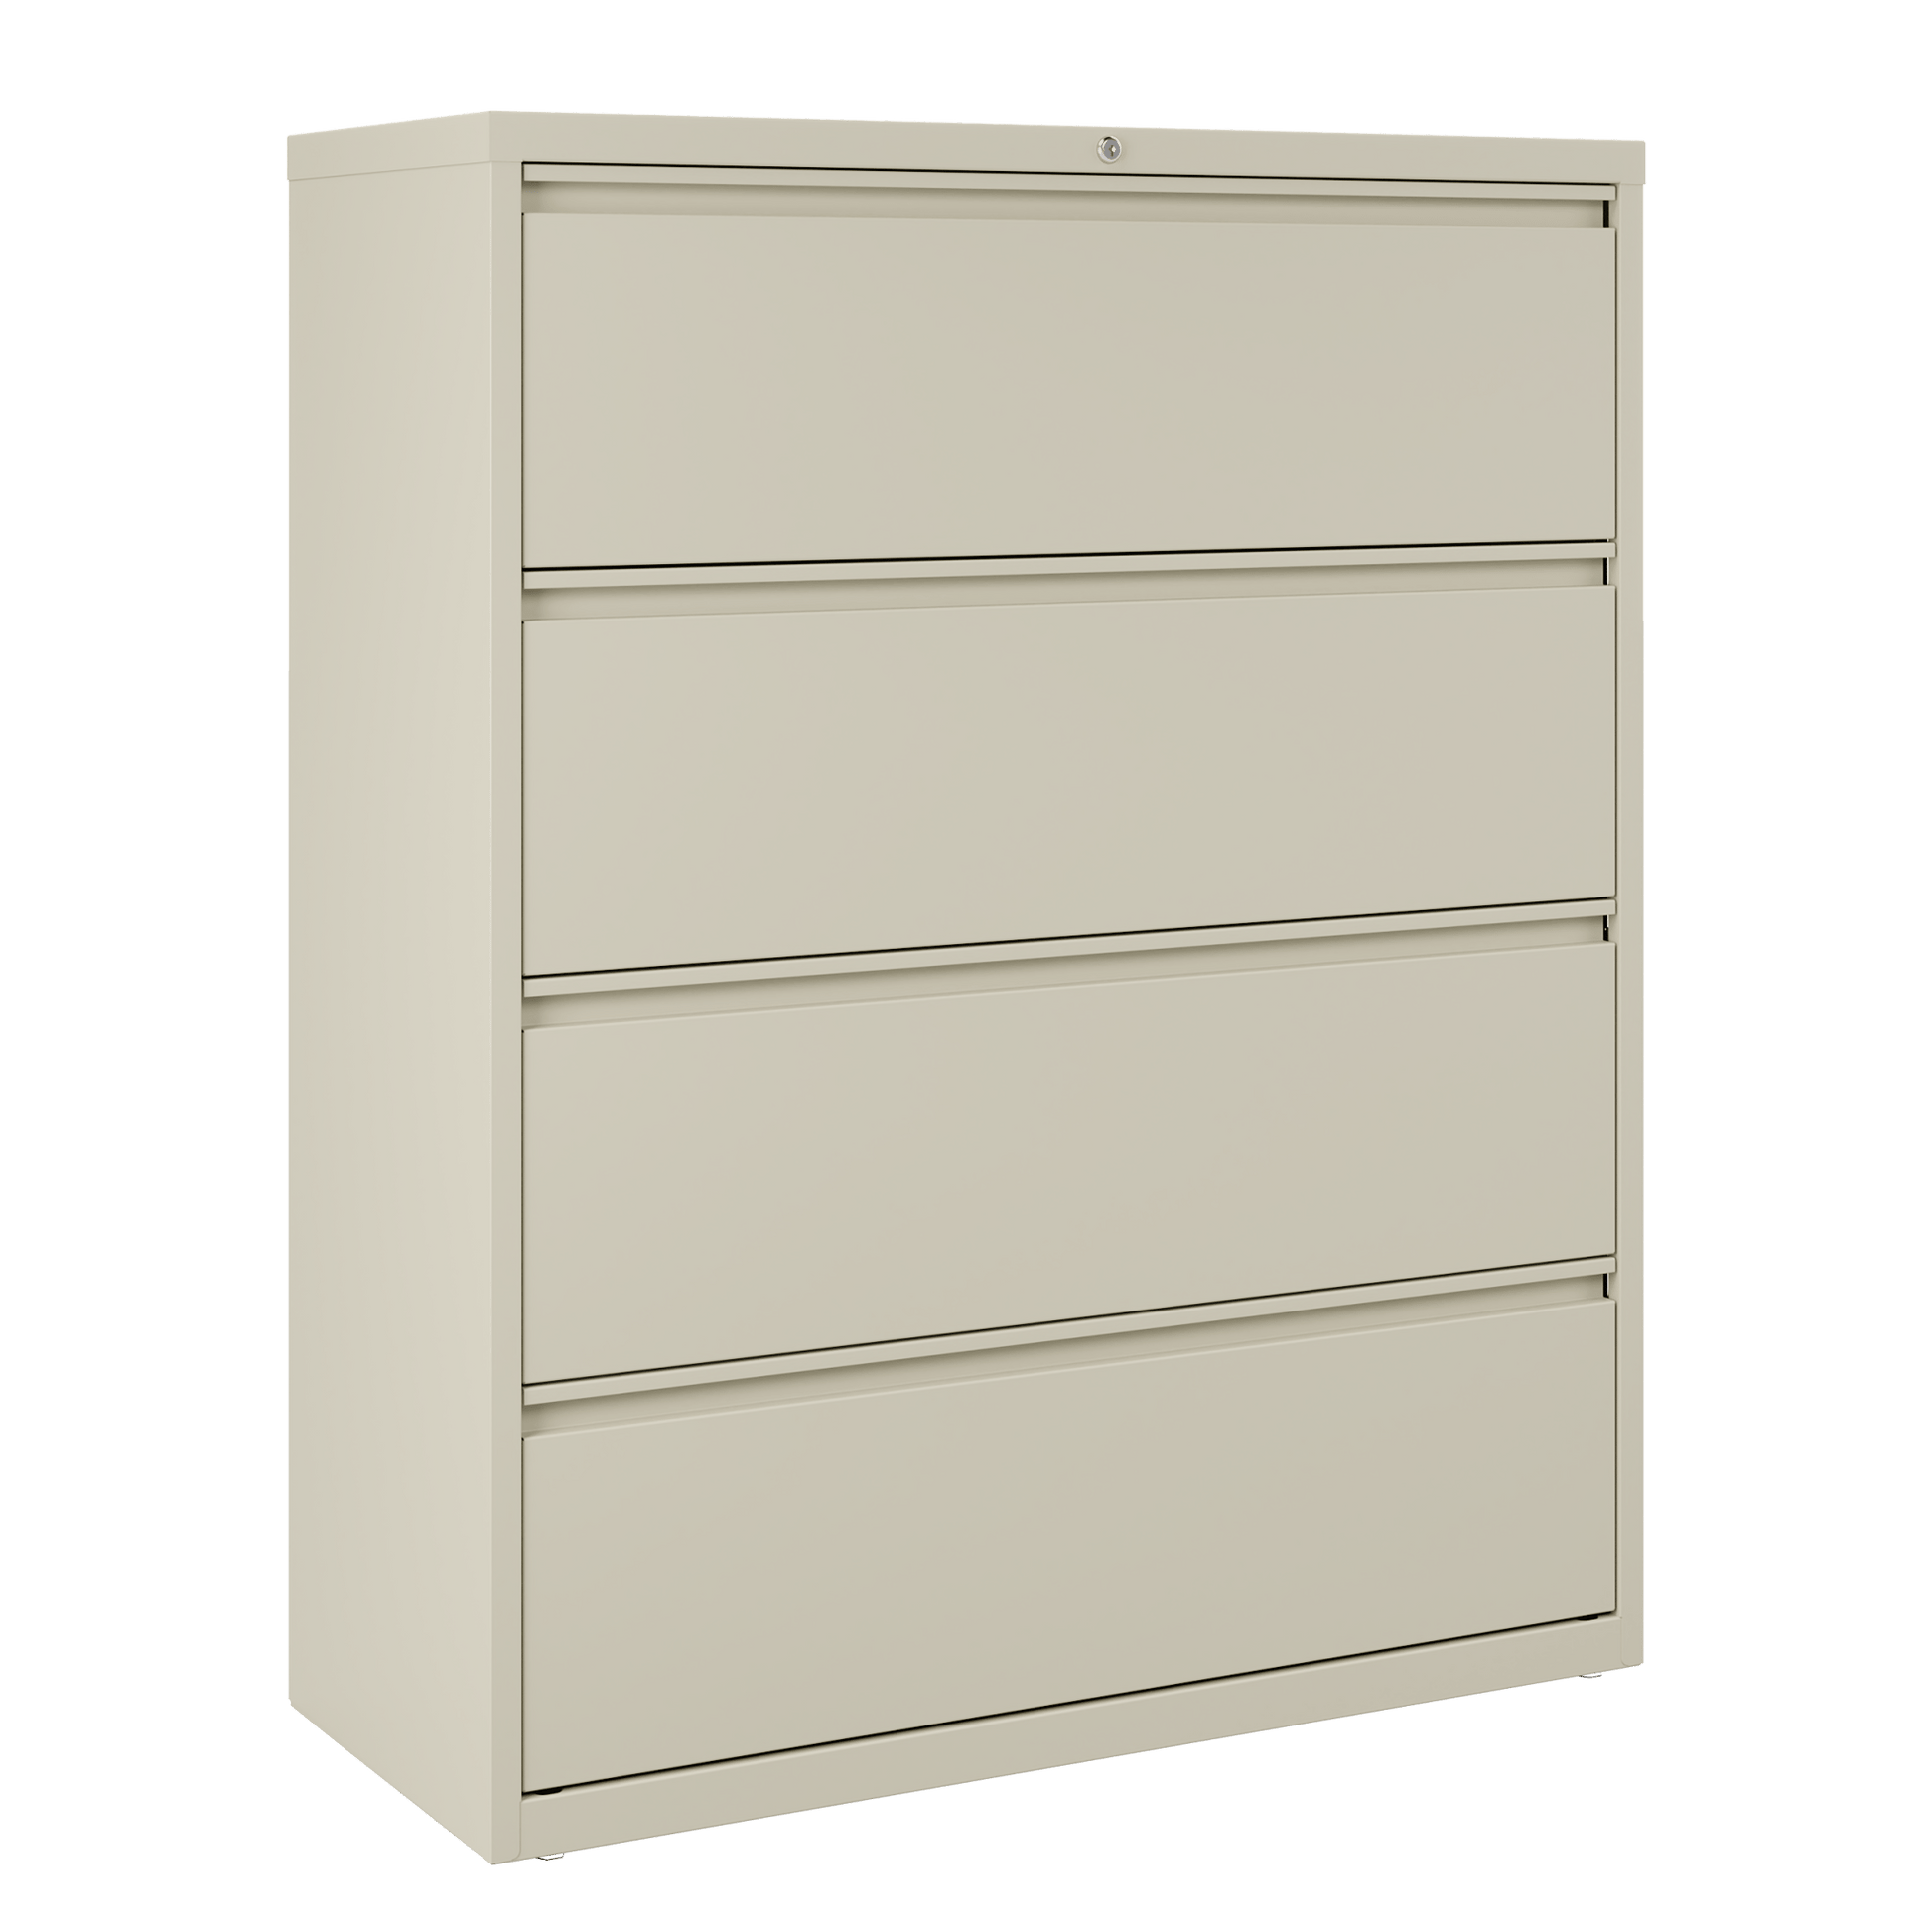 File cabinet for hanging folders